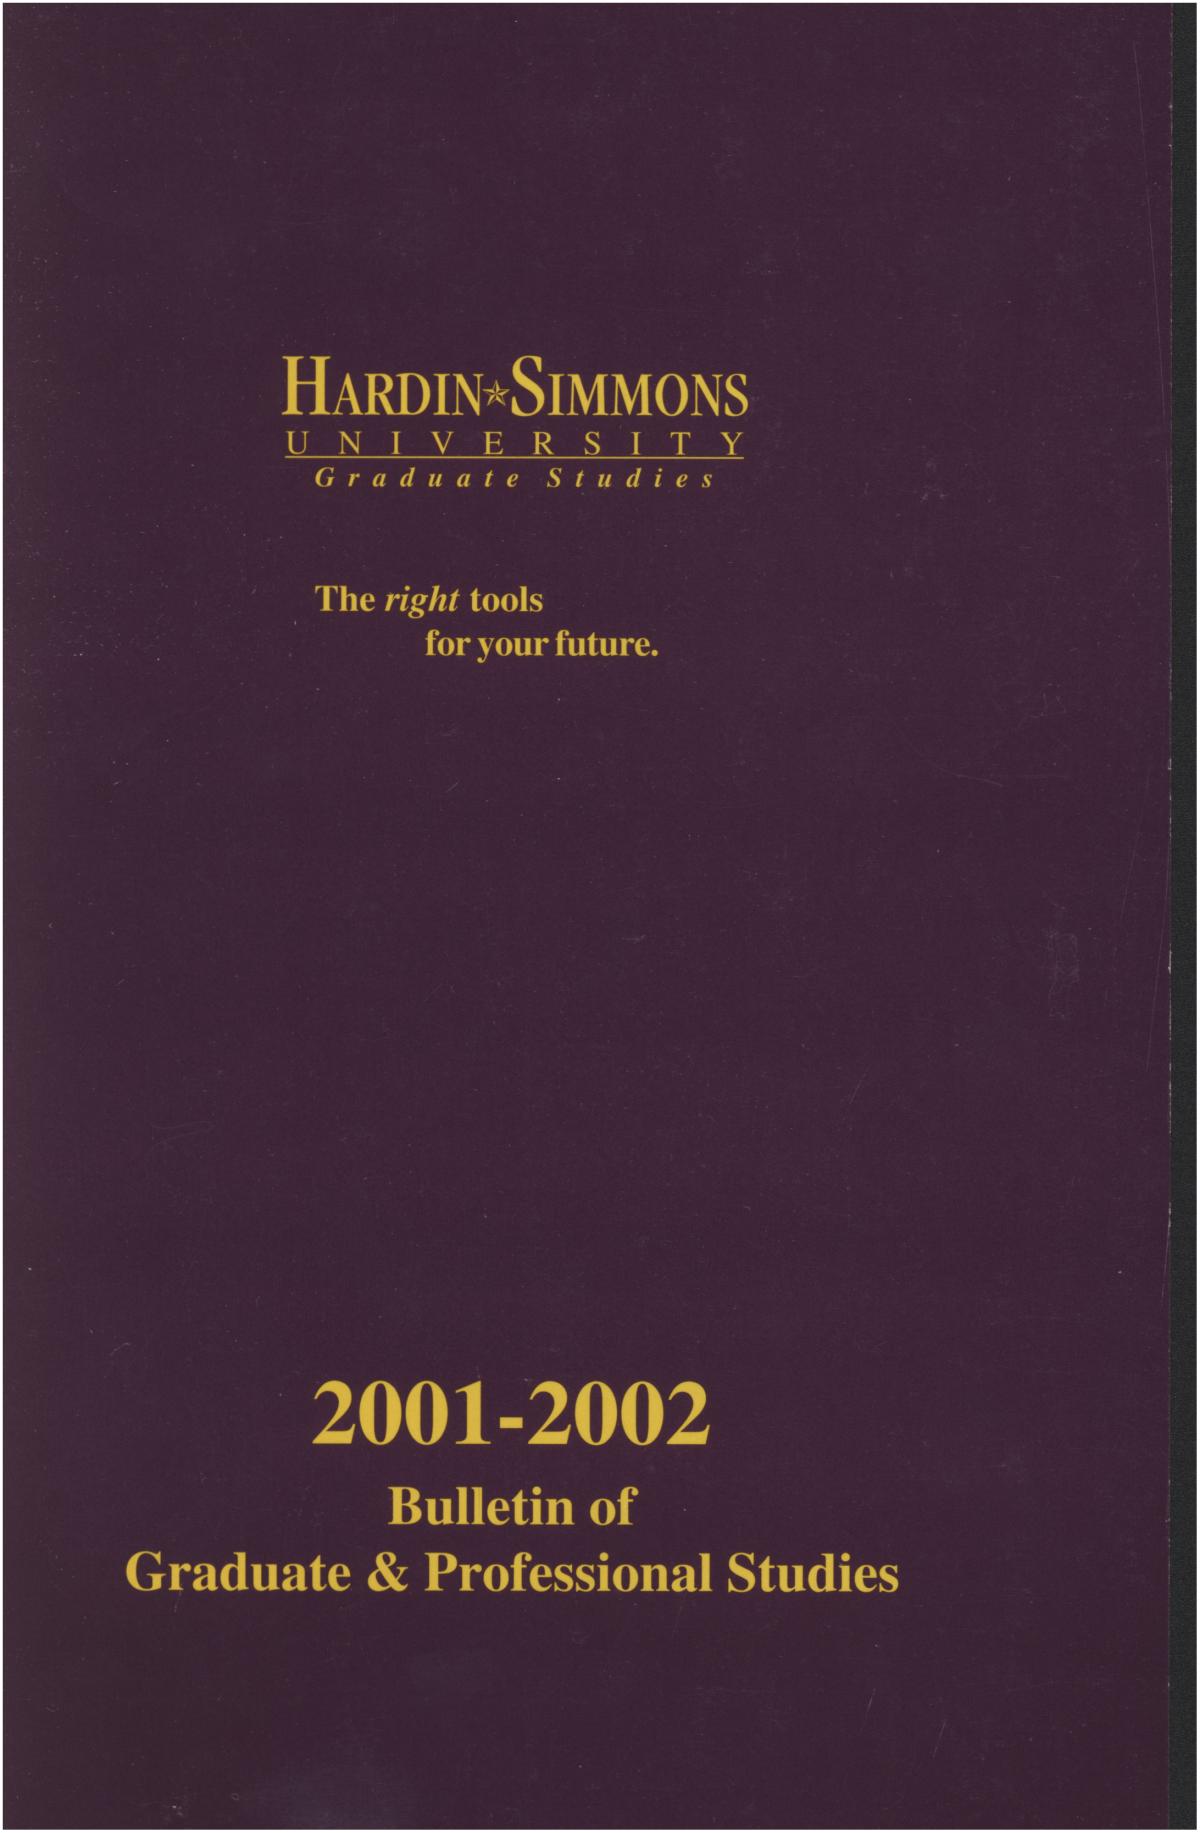 Catalog of Hardin-Simmons University, 2001-2002 Graduate Bulletin
                                                
                                                    Front Cover
                                                